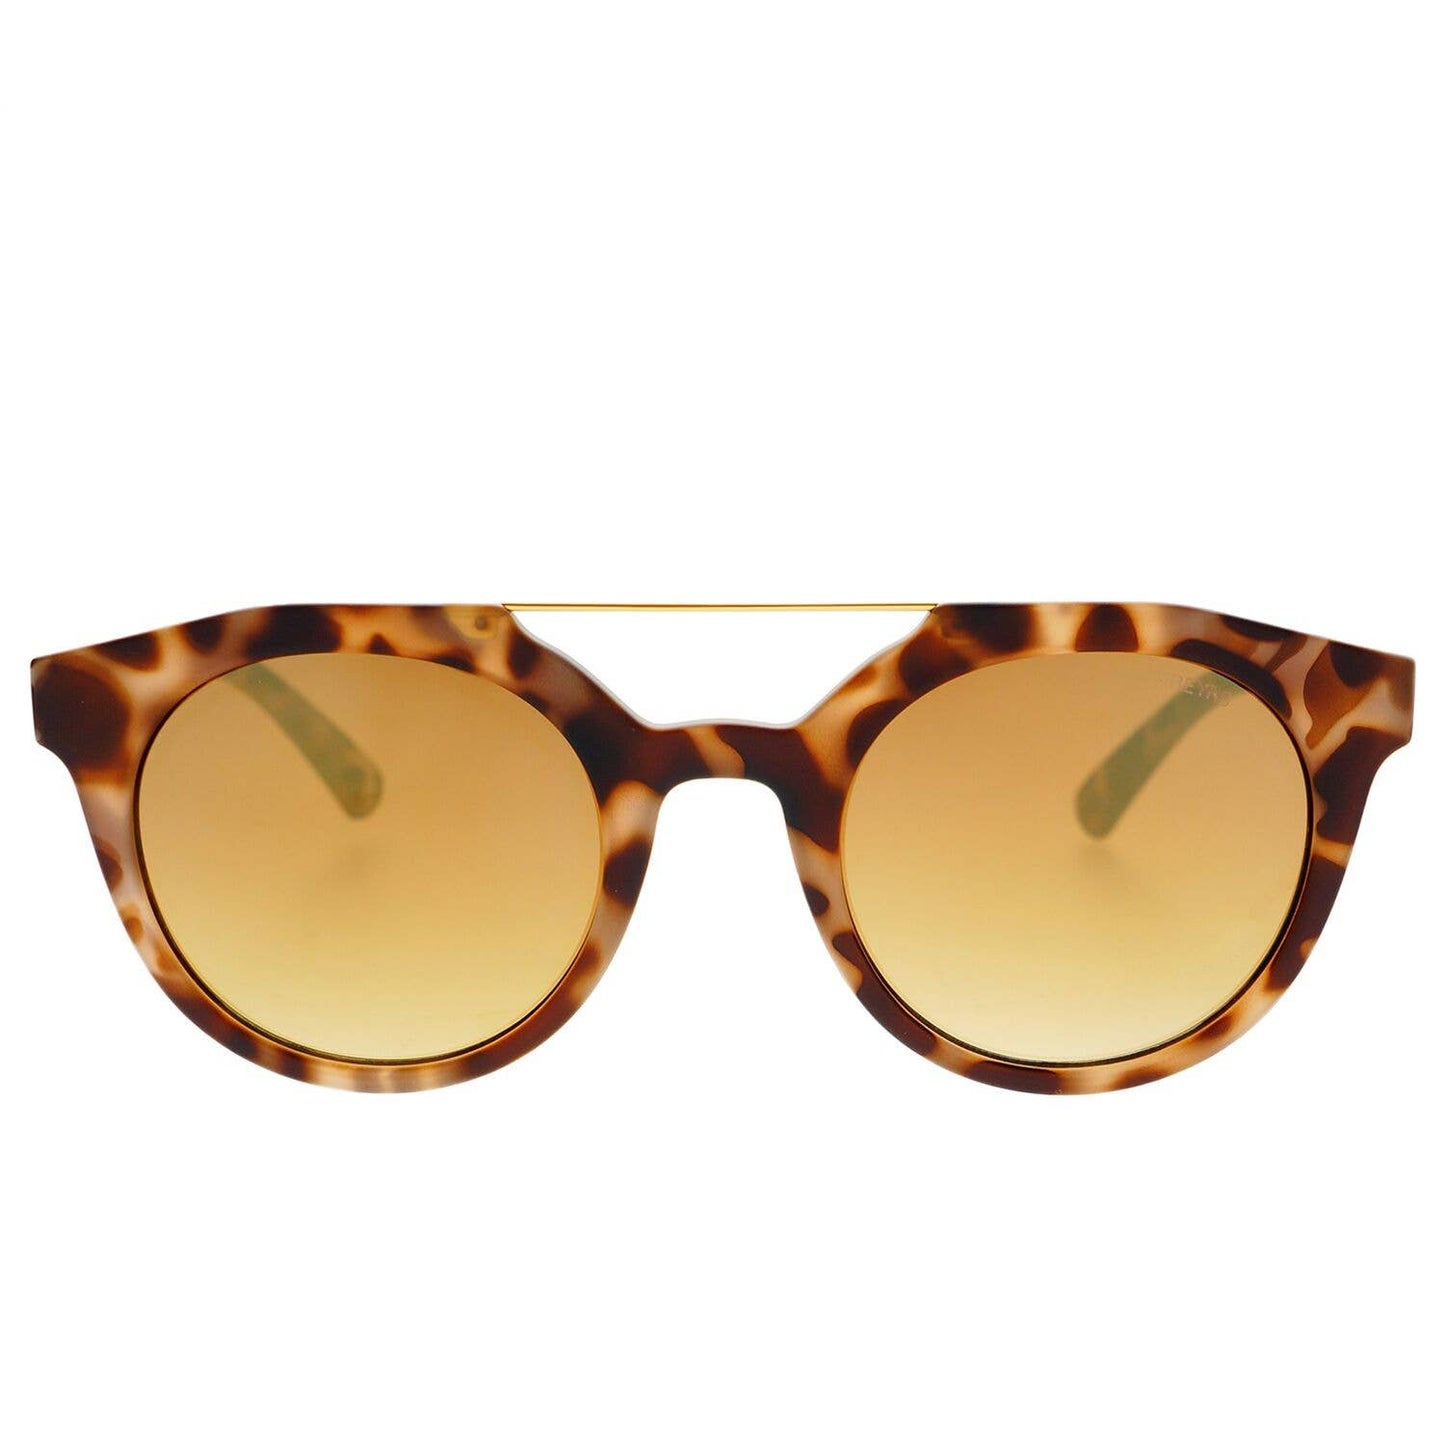 Collins Sunglasses Tortoise / Gold